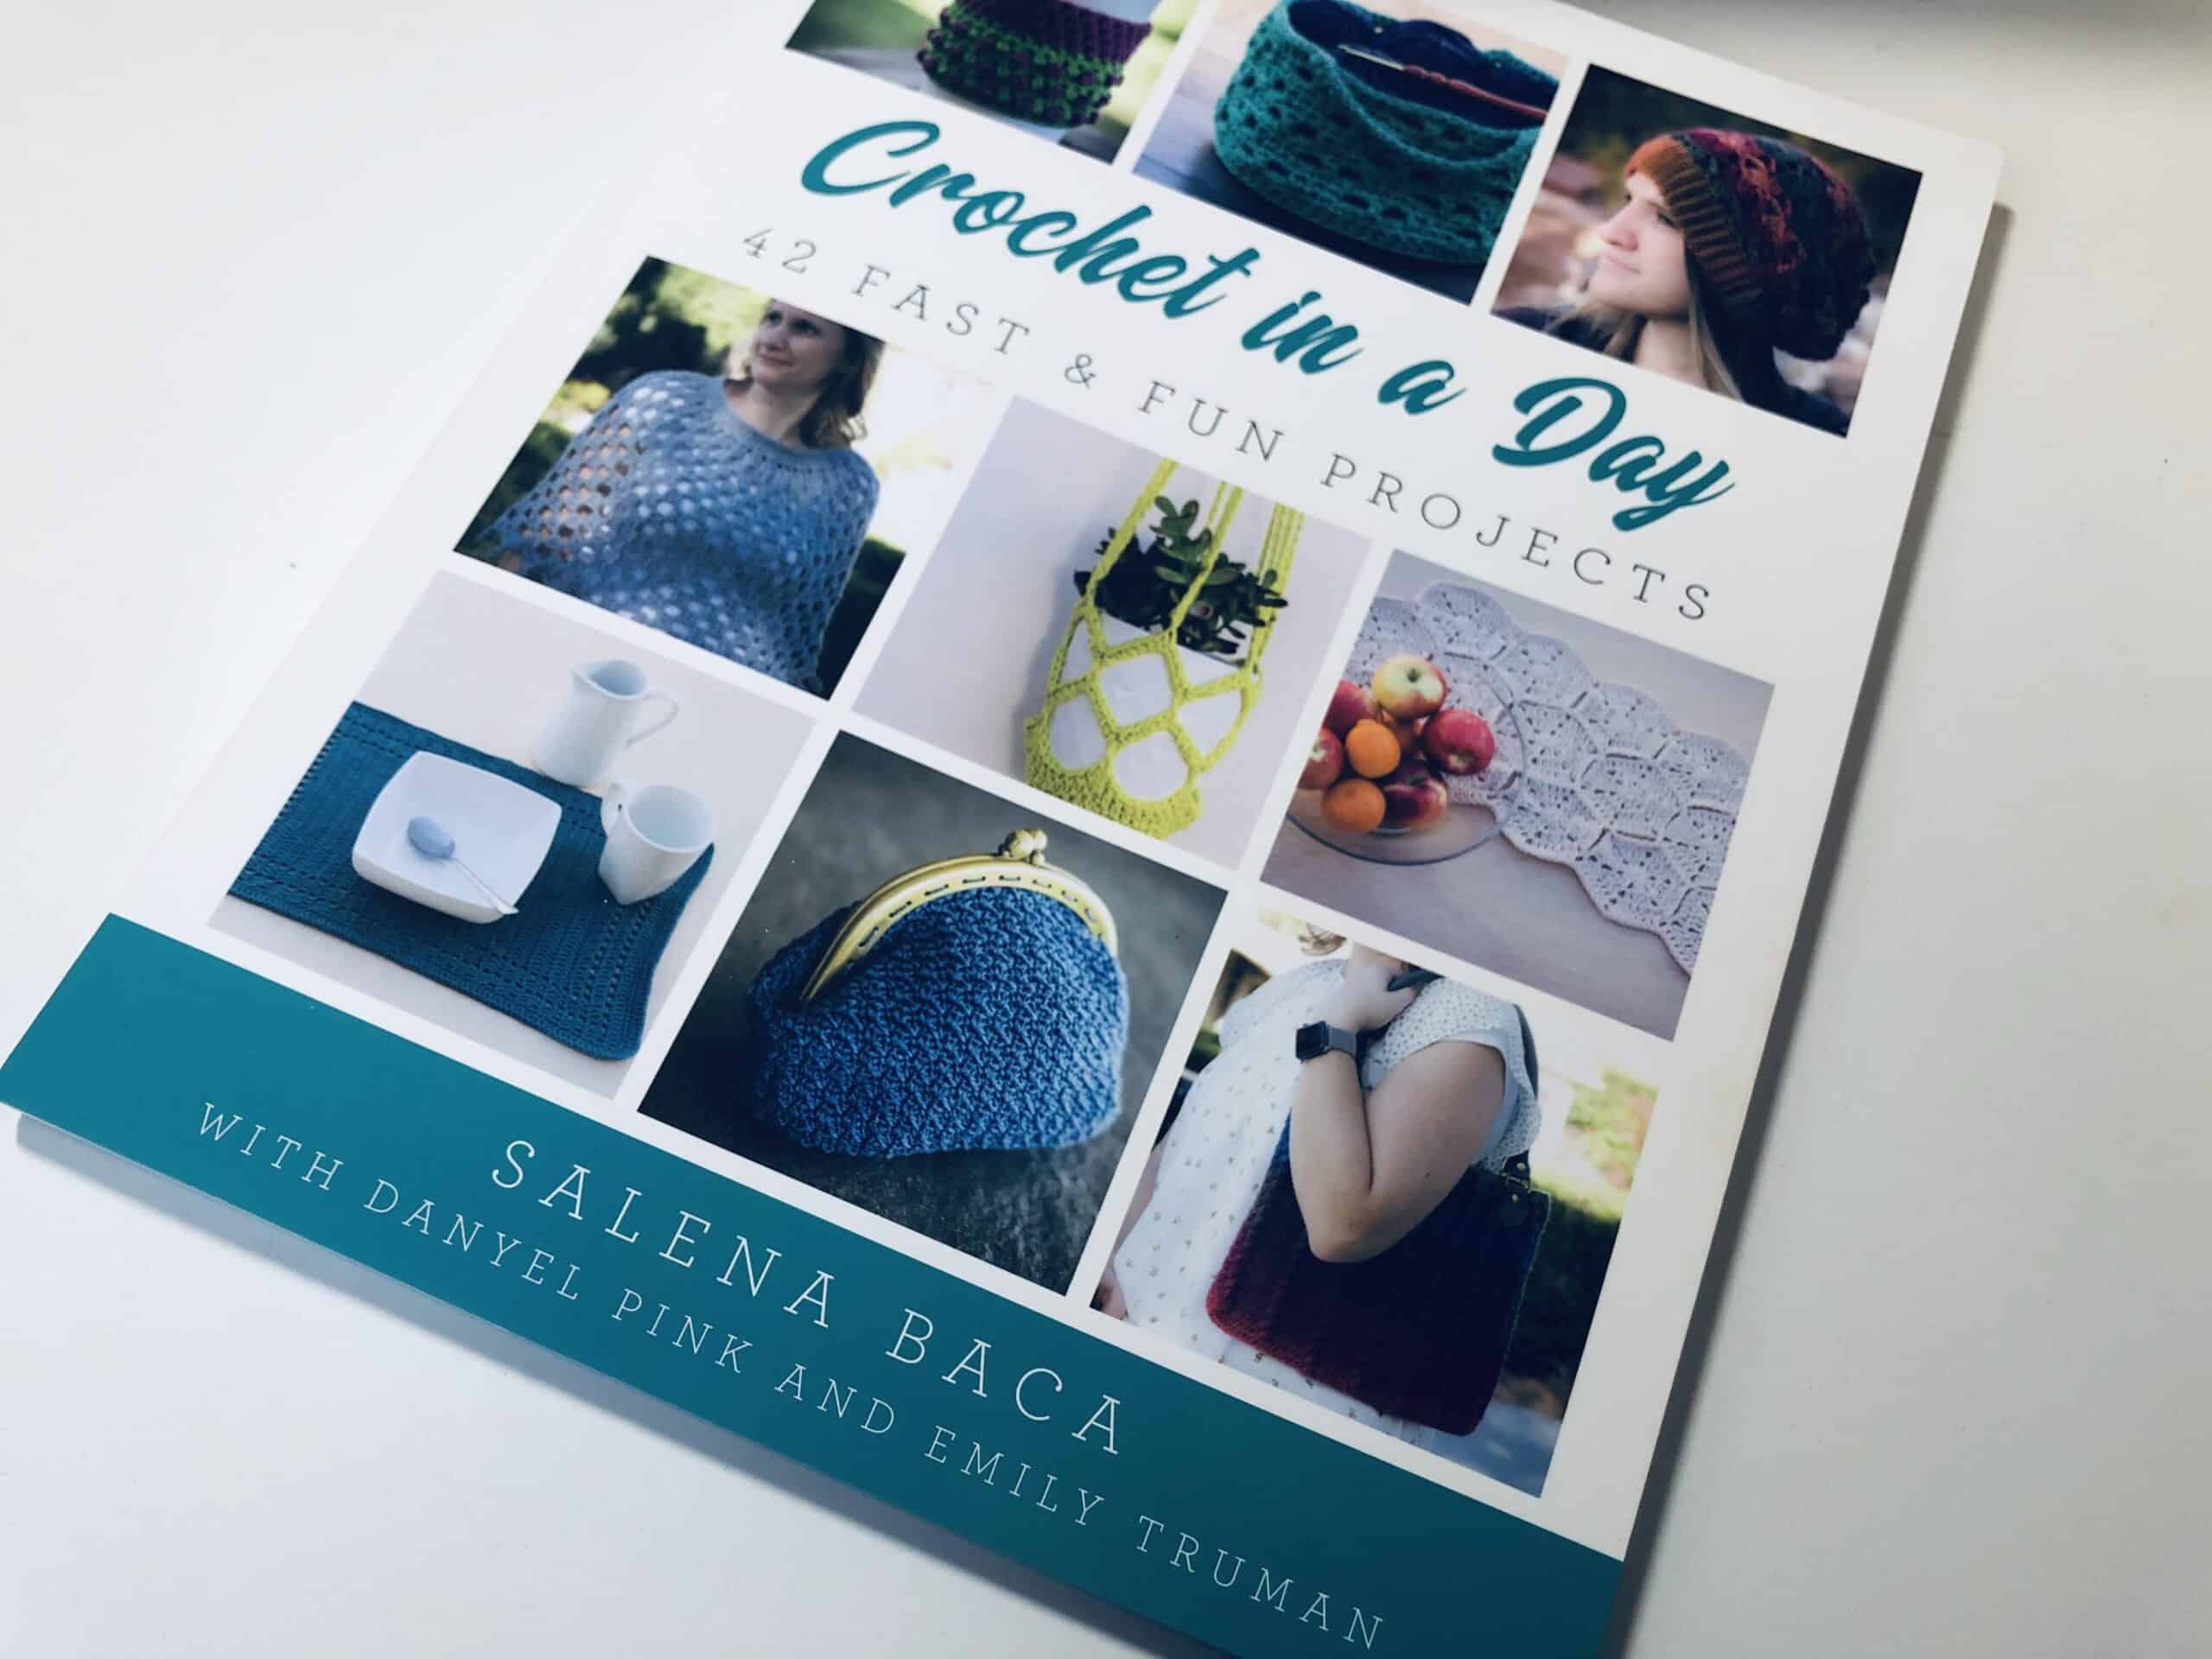 Crochet in a day book cover | American Crochet Association